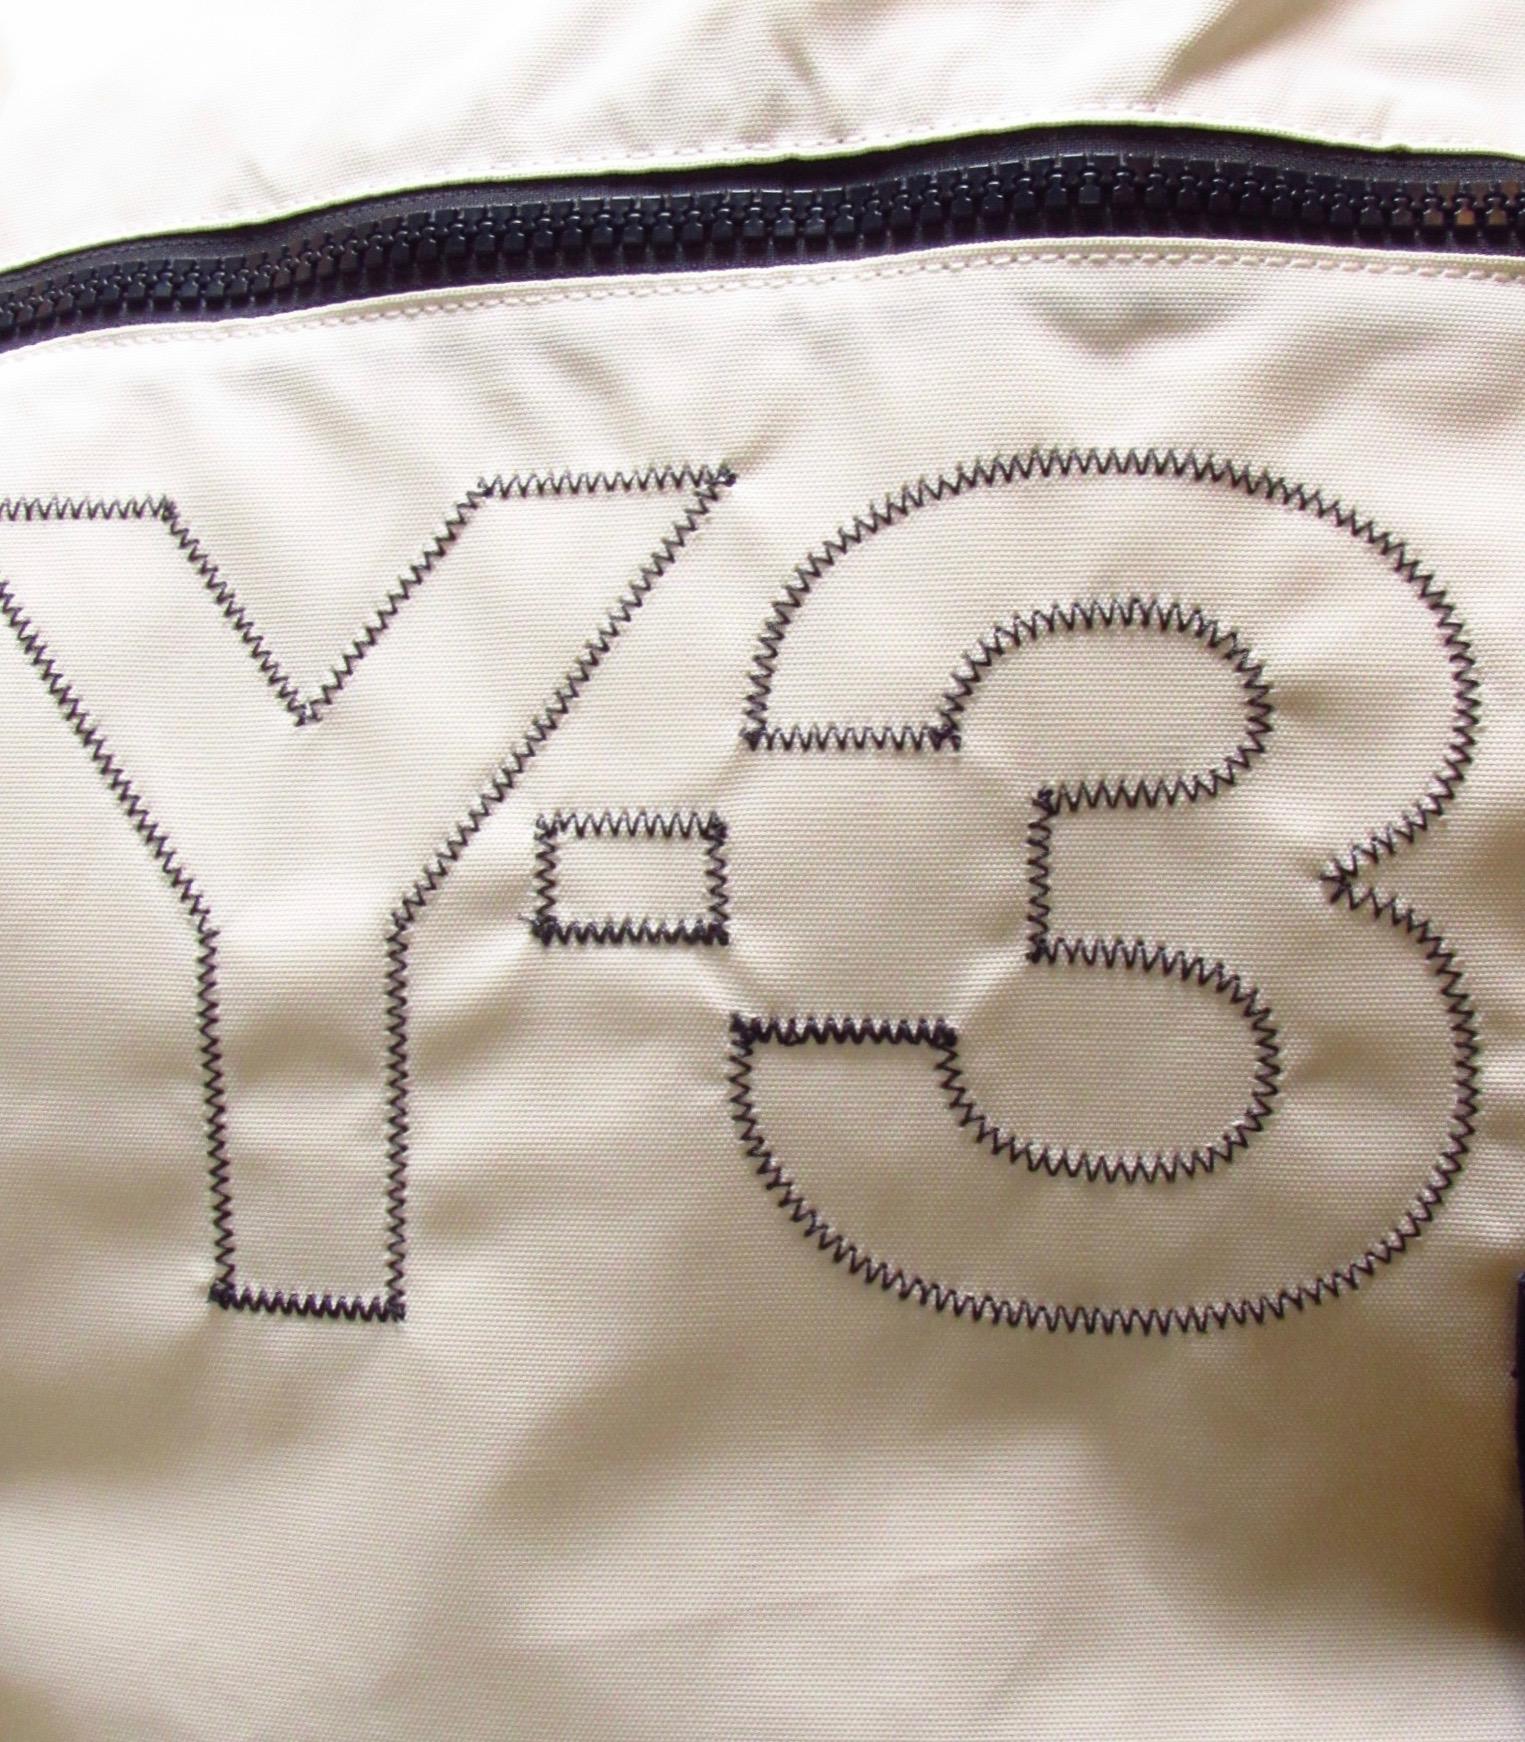 yohji yamamoto messenger bag